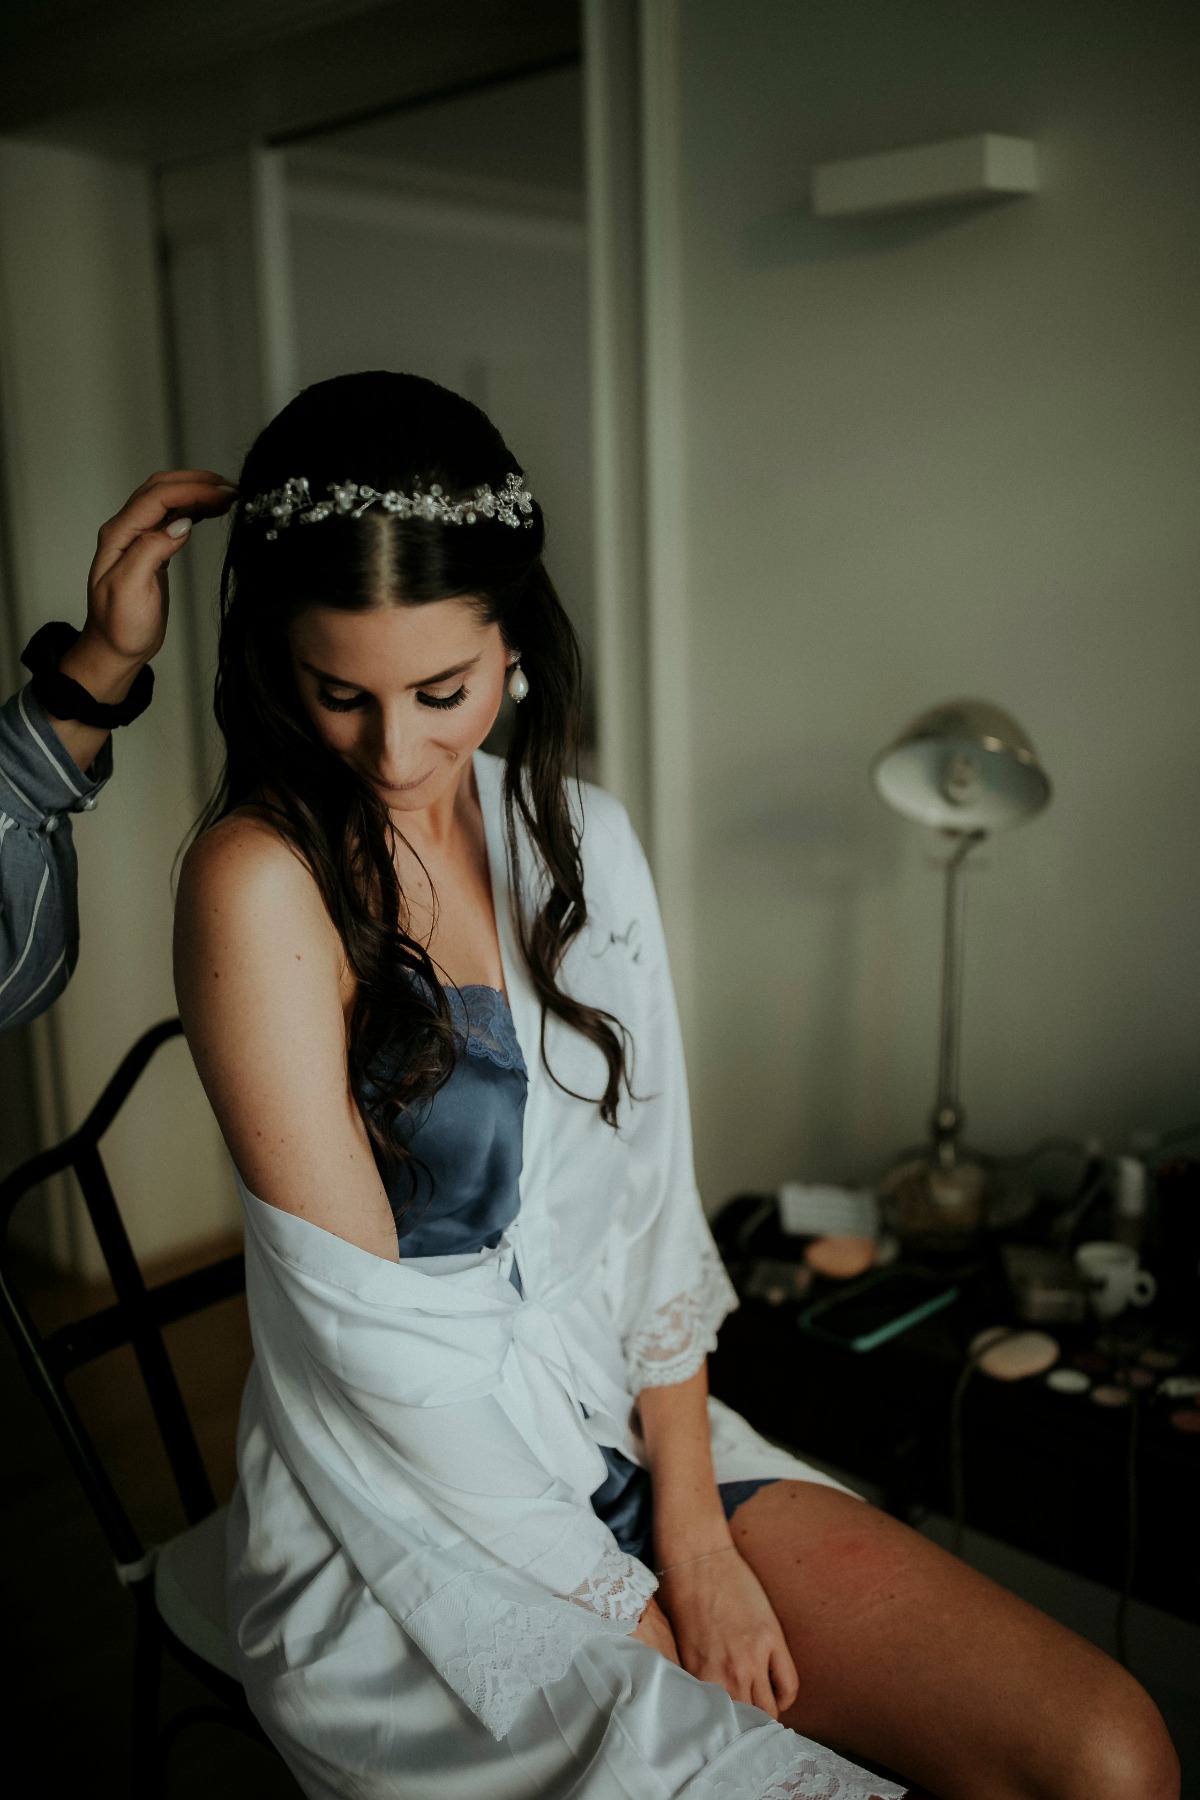 Wedding hair with flower crown